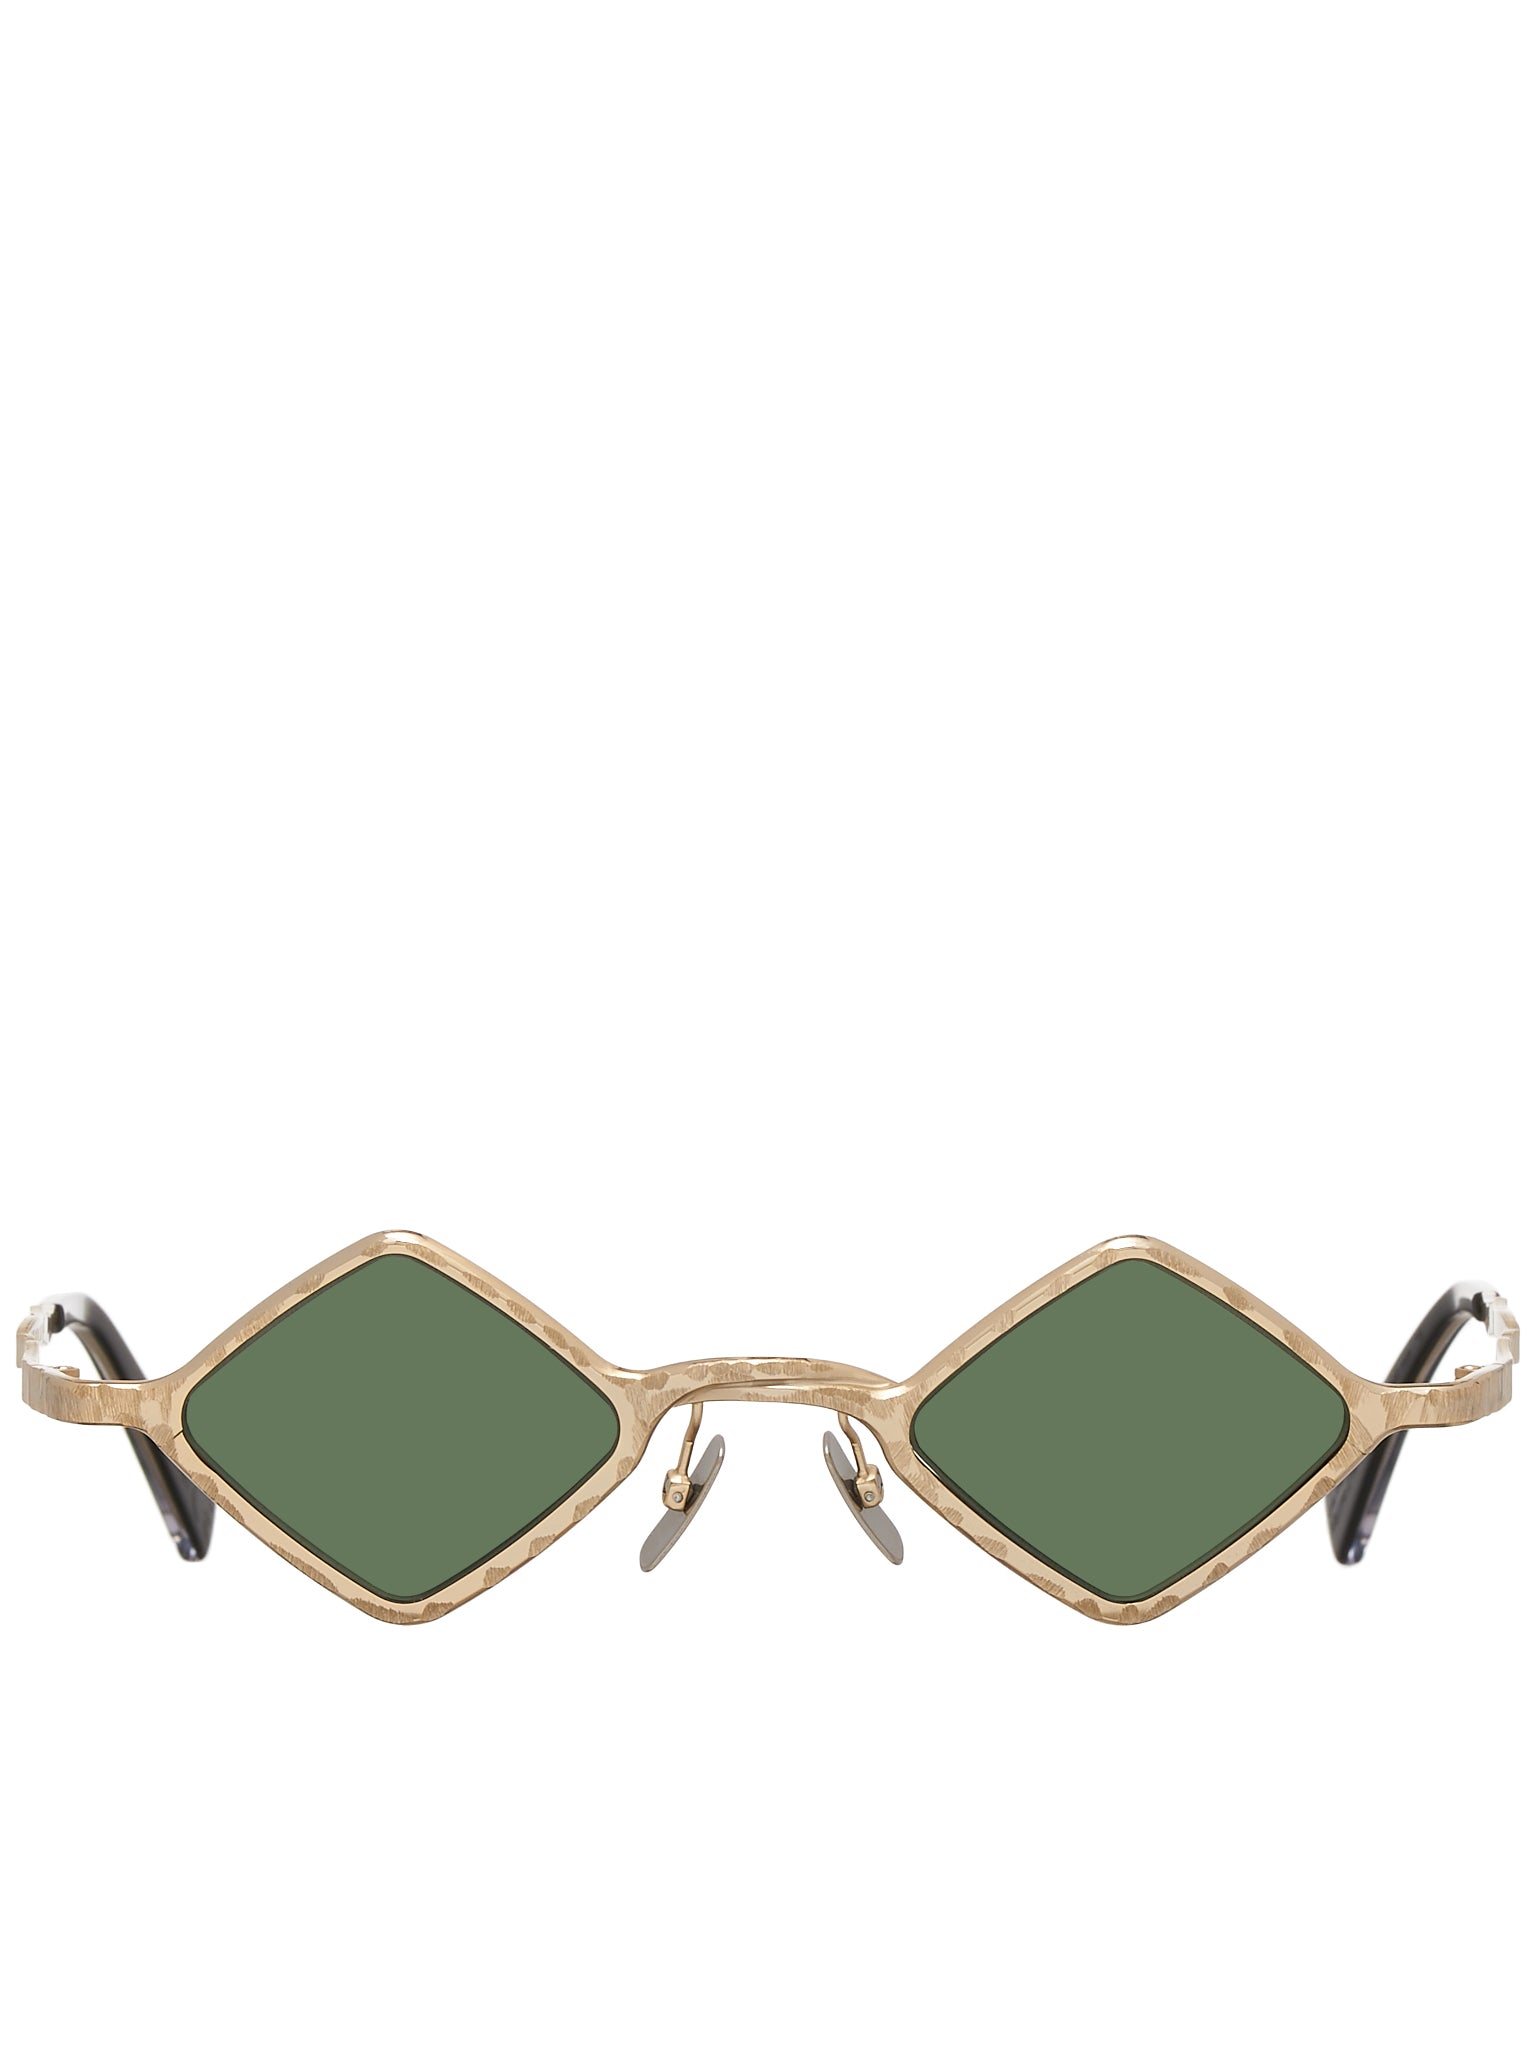 Z14 Sunglasses (Z14-41-25-GD-F-GREEN)